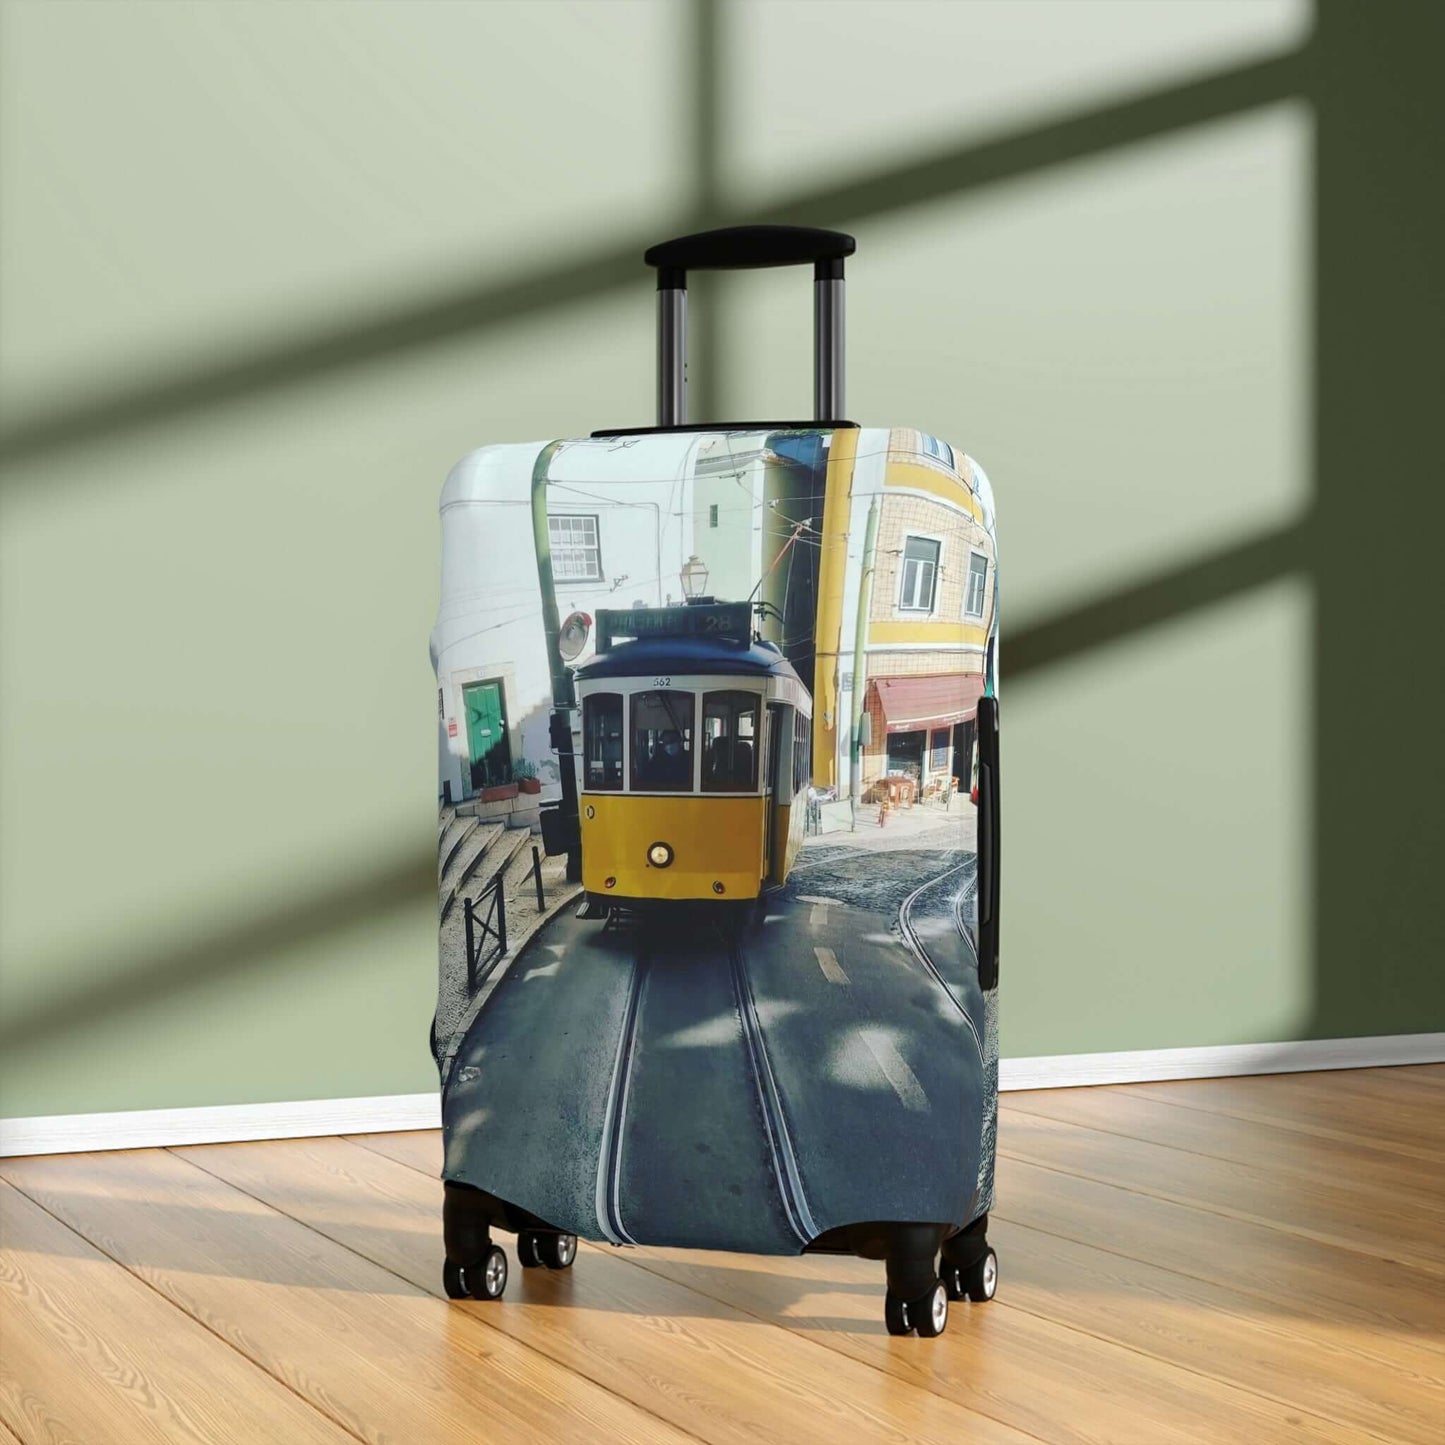 Remodelado Tram | Portugal | Luggage Cover